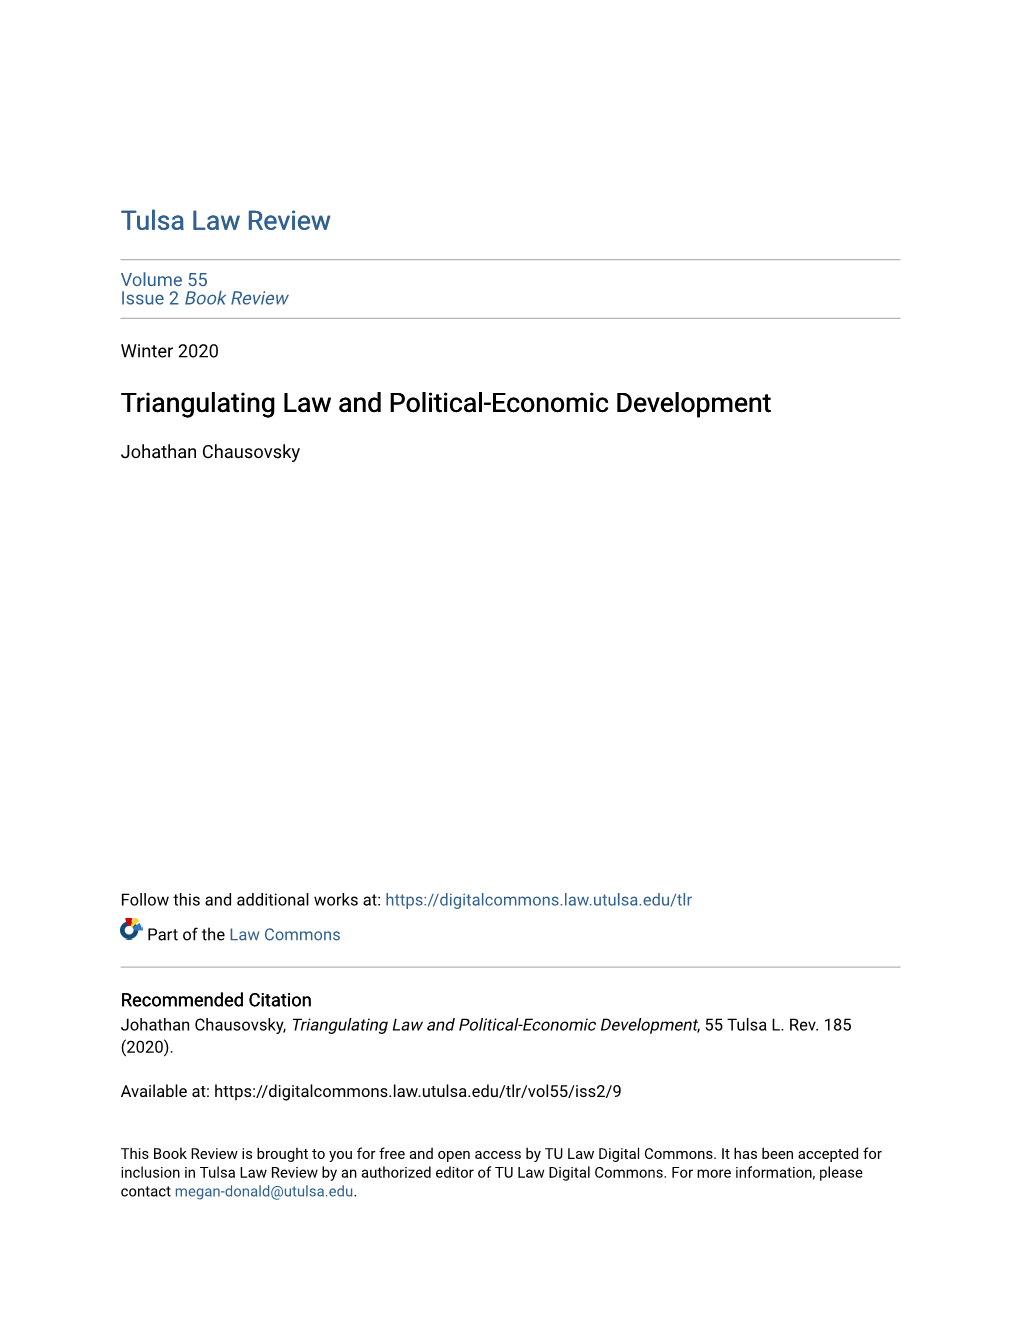 Triangulating Law and Political-Economic Development